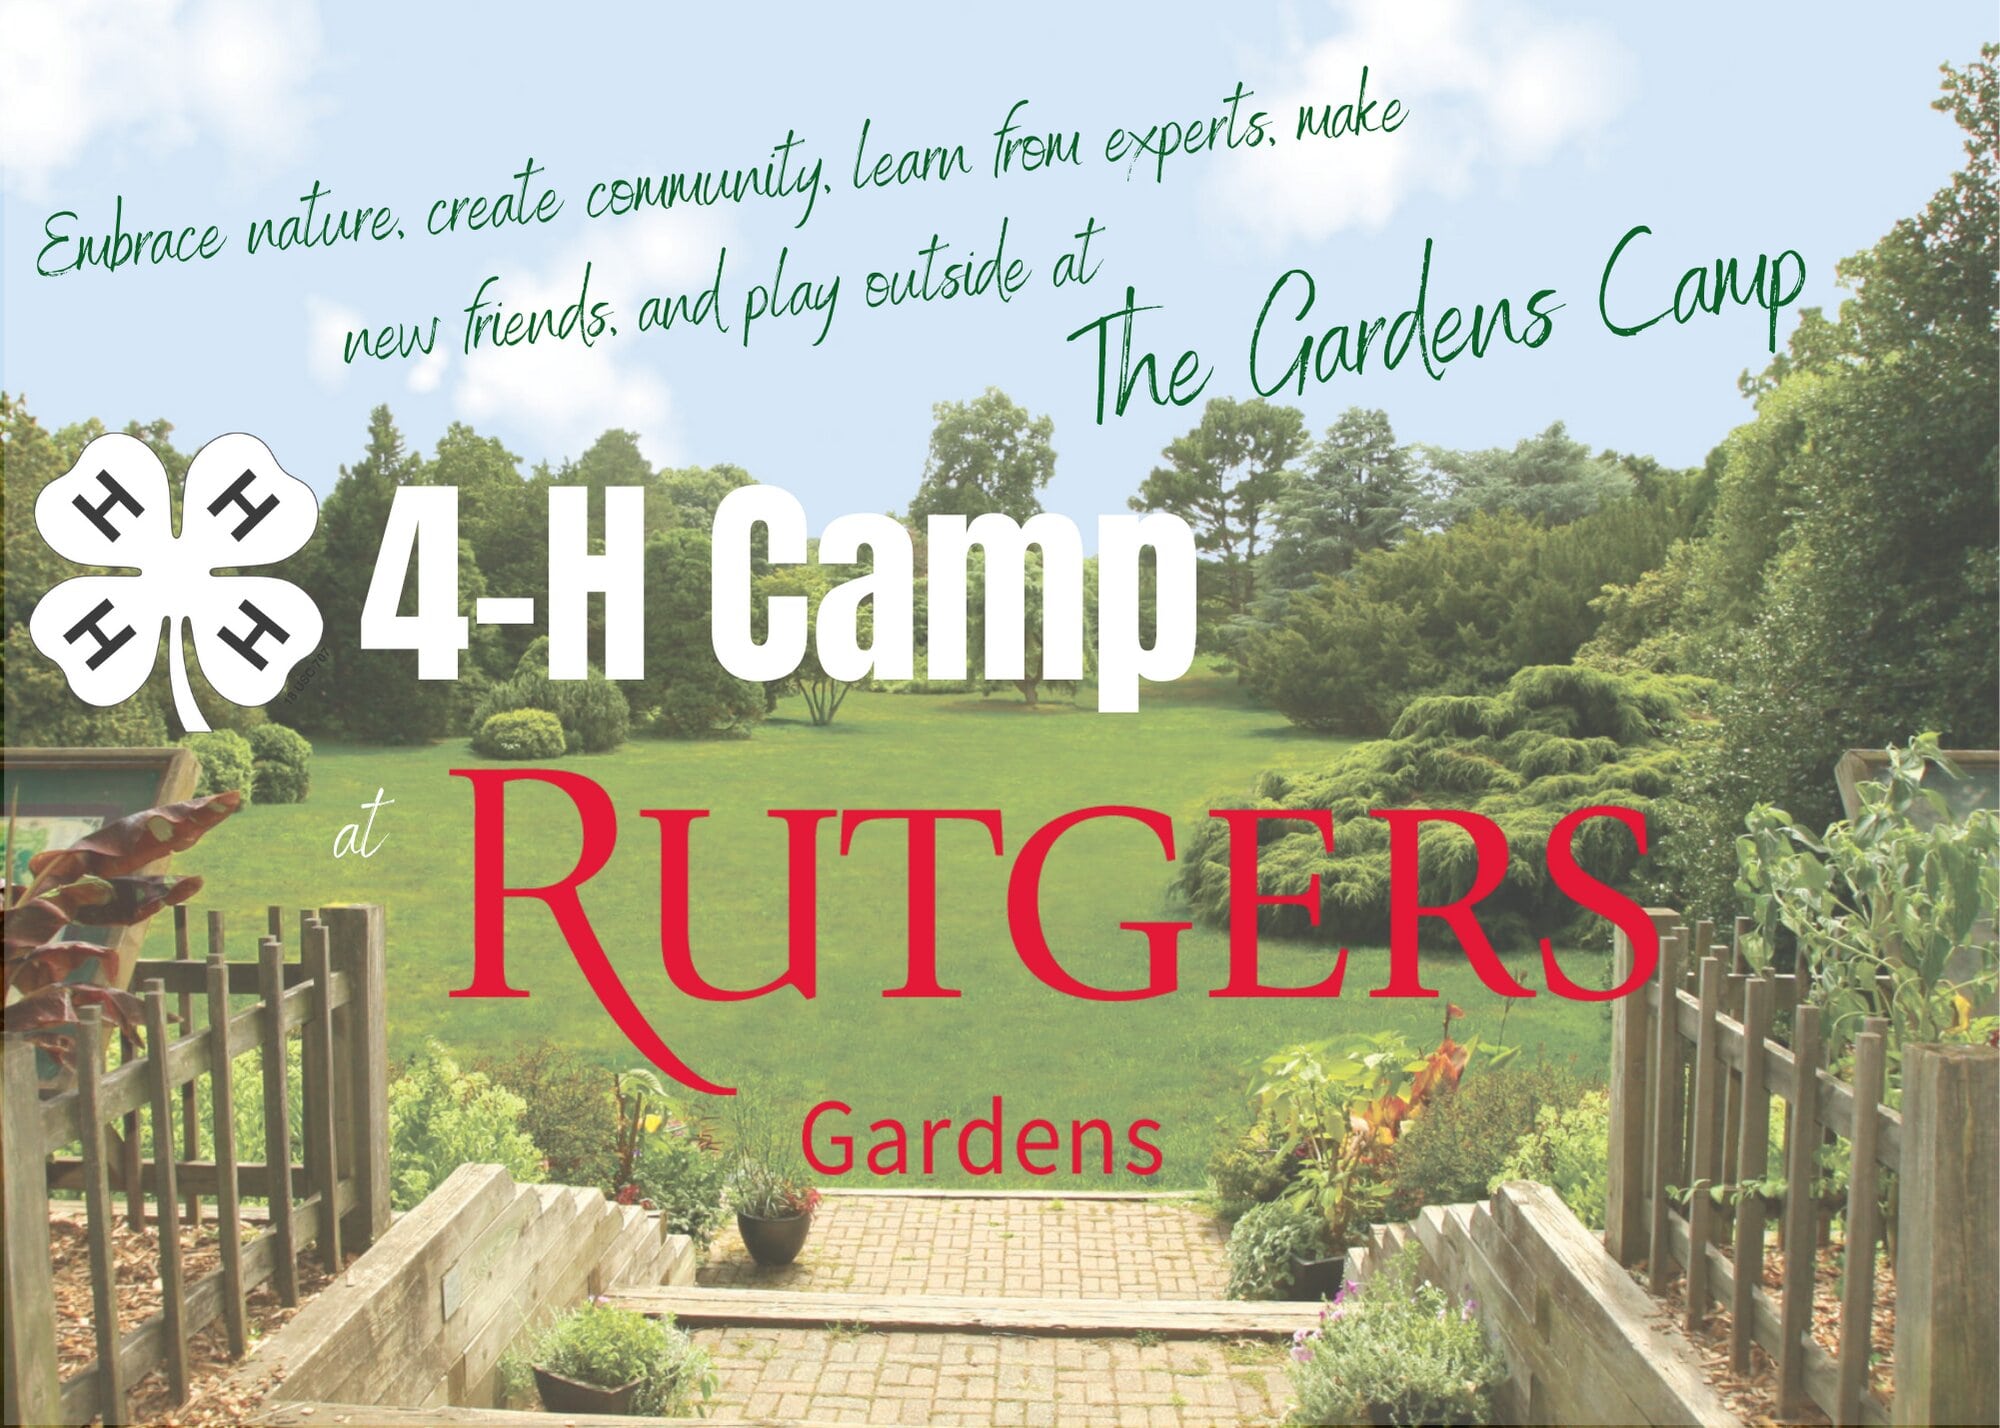 Rutgers Gardens